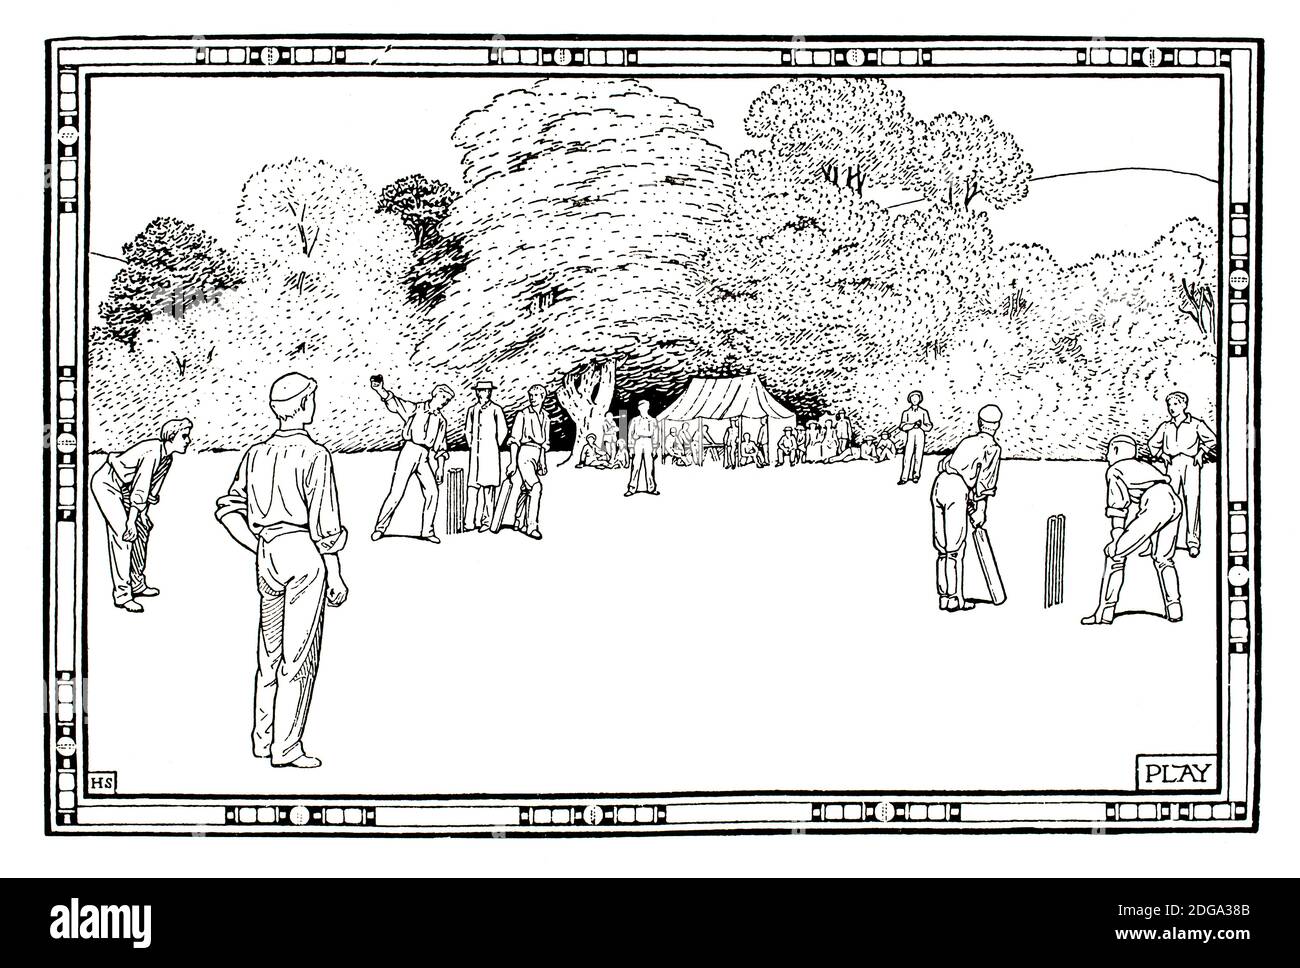 Jouer, fin Victorian club cricket jeu, Fitzroy Pictures illustration par Heywood Sumner de 1896 The Studio an Illustrated Magazine of Fine and appli Banque D'Images